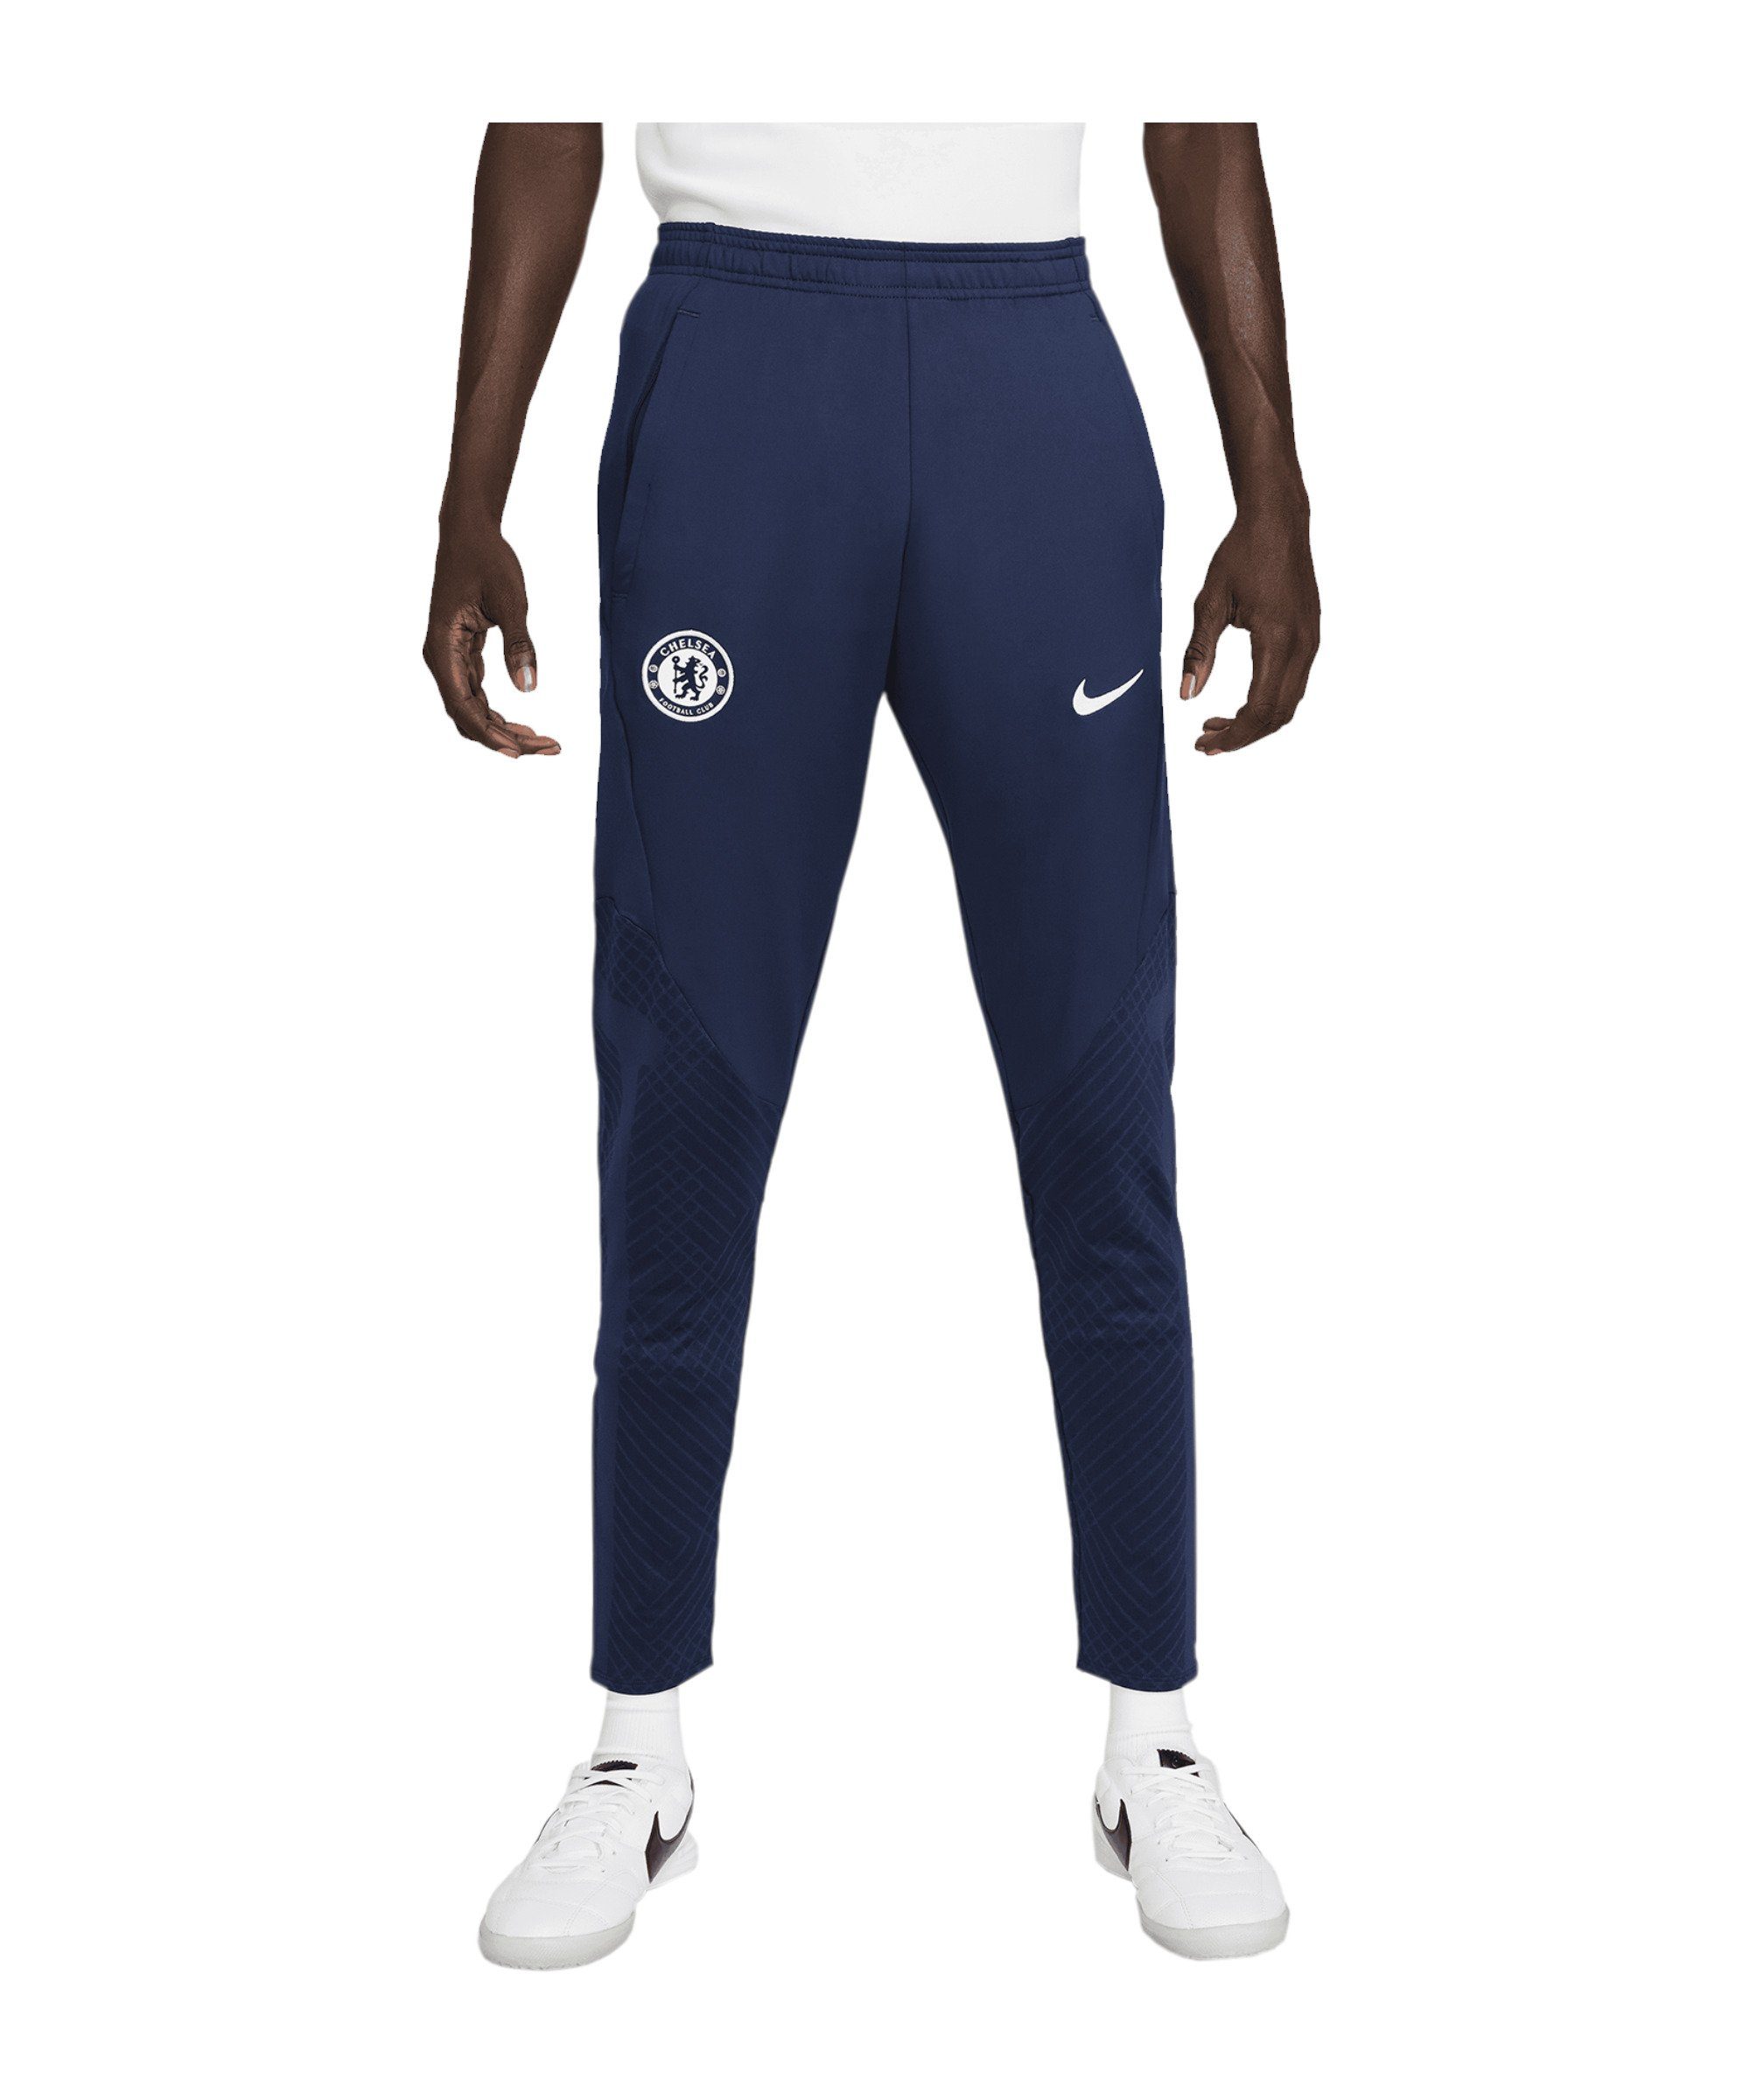 FC Trainingshose Chelsea Nike London Sweatpants